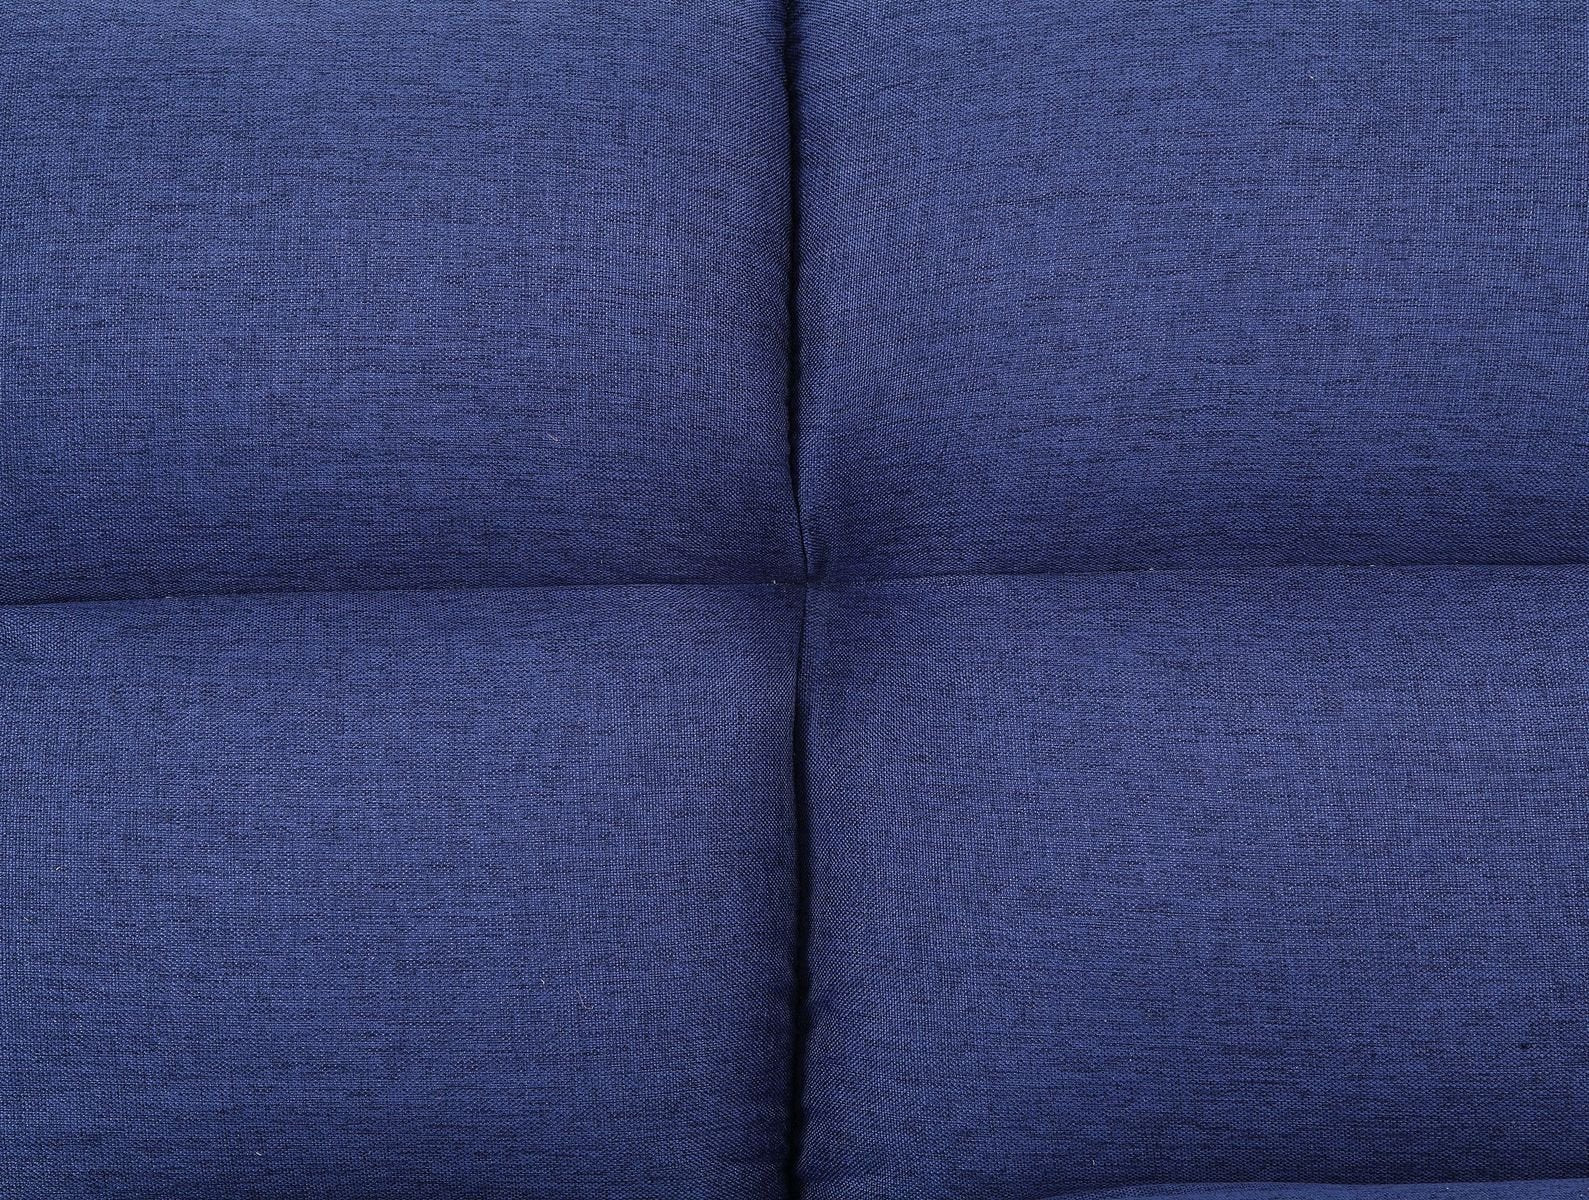 Petokea Adjustable Sofa, Blue Fabric 58255 - Demine Essentials